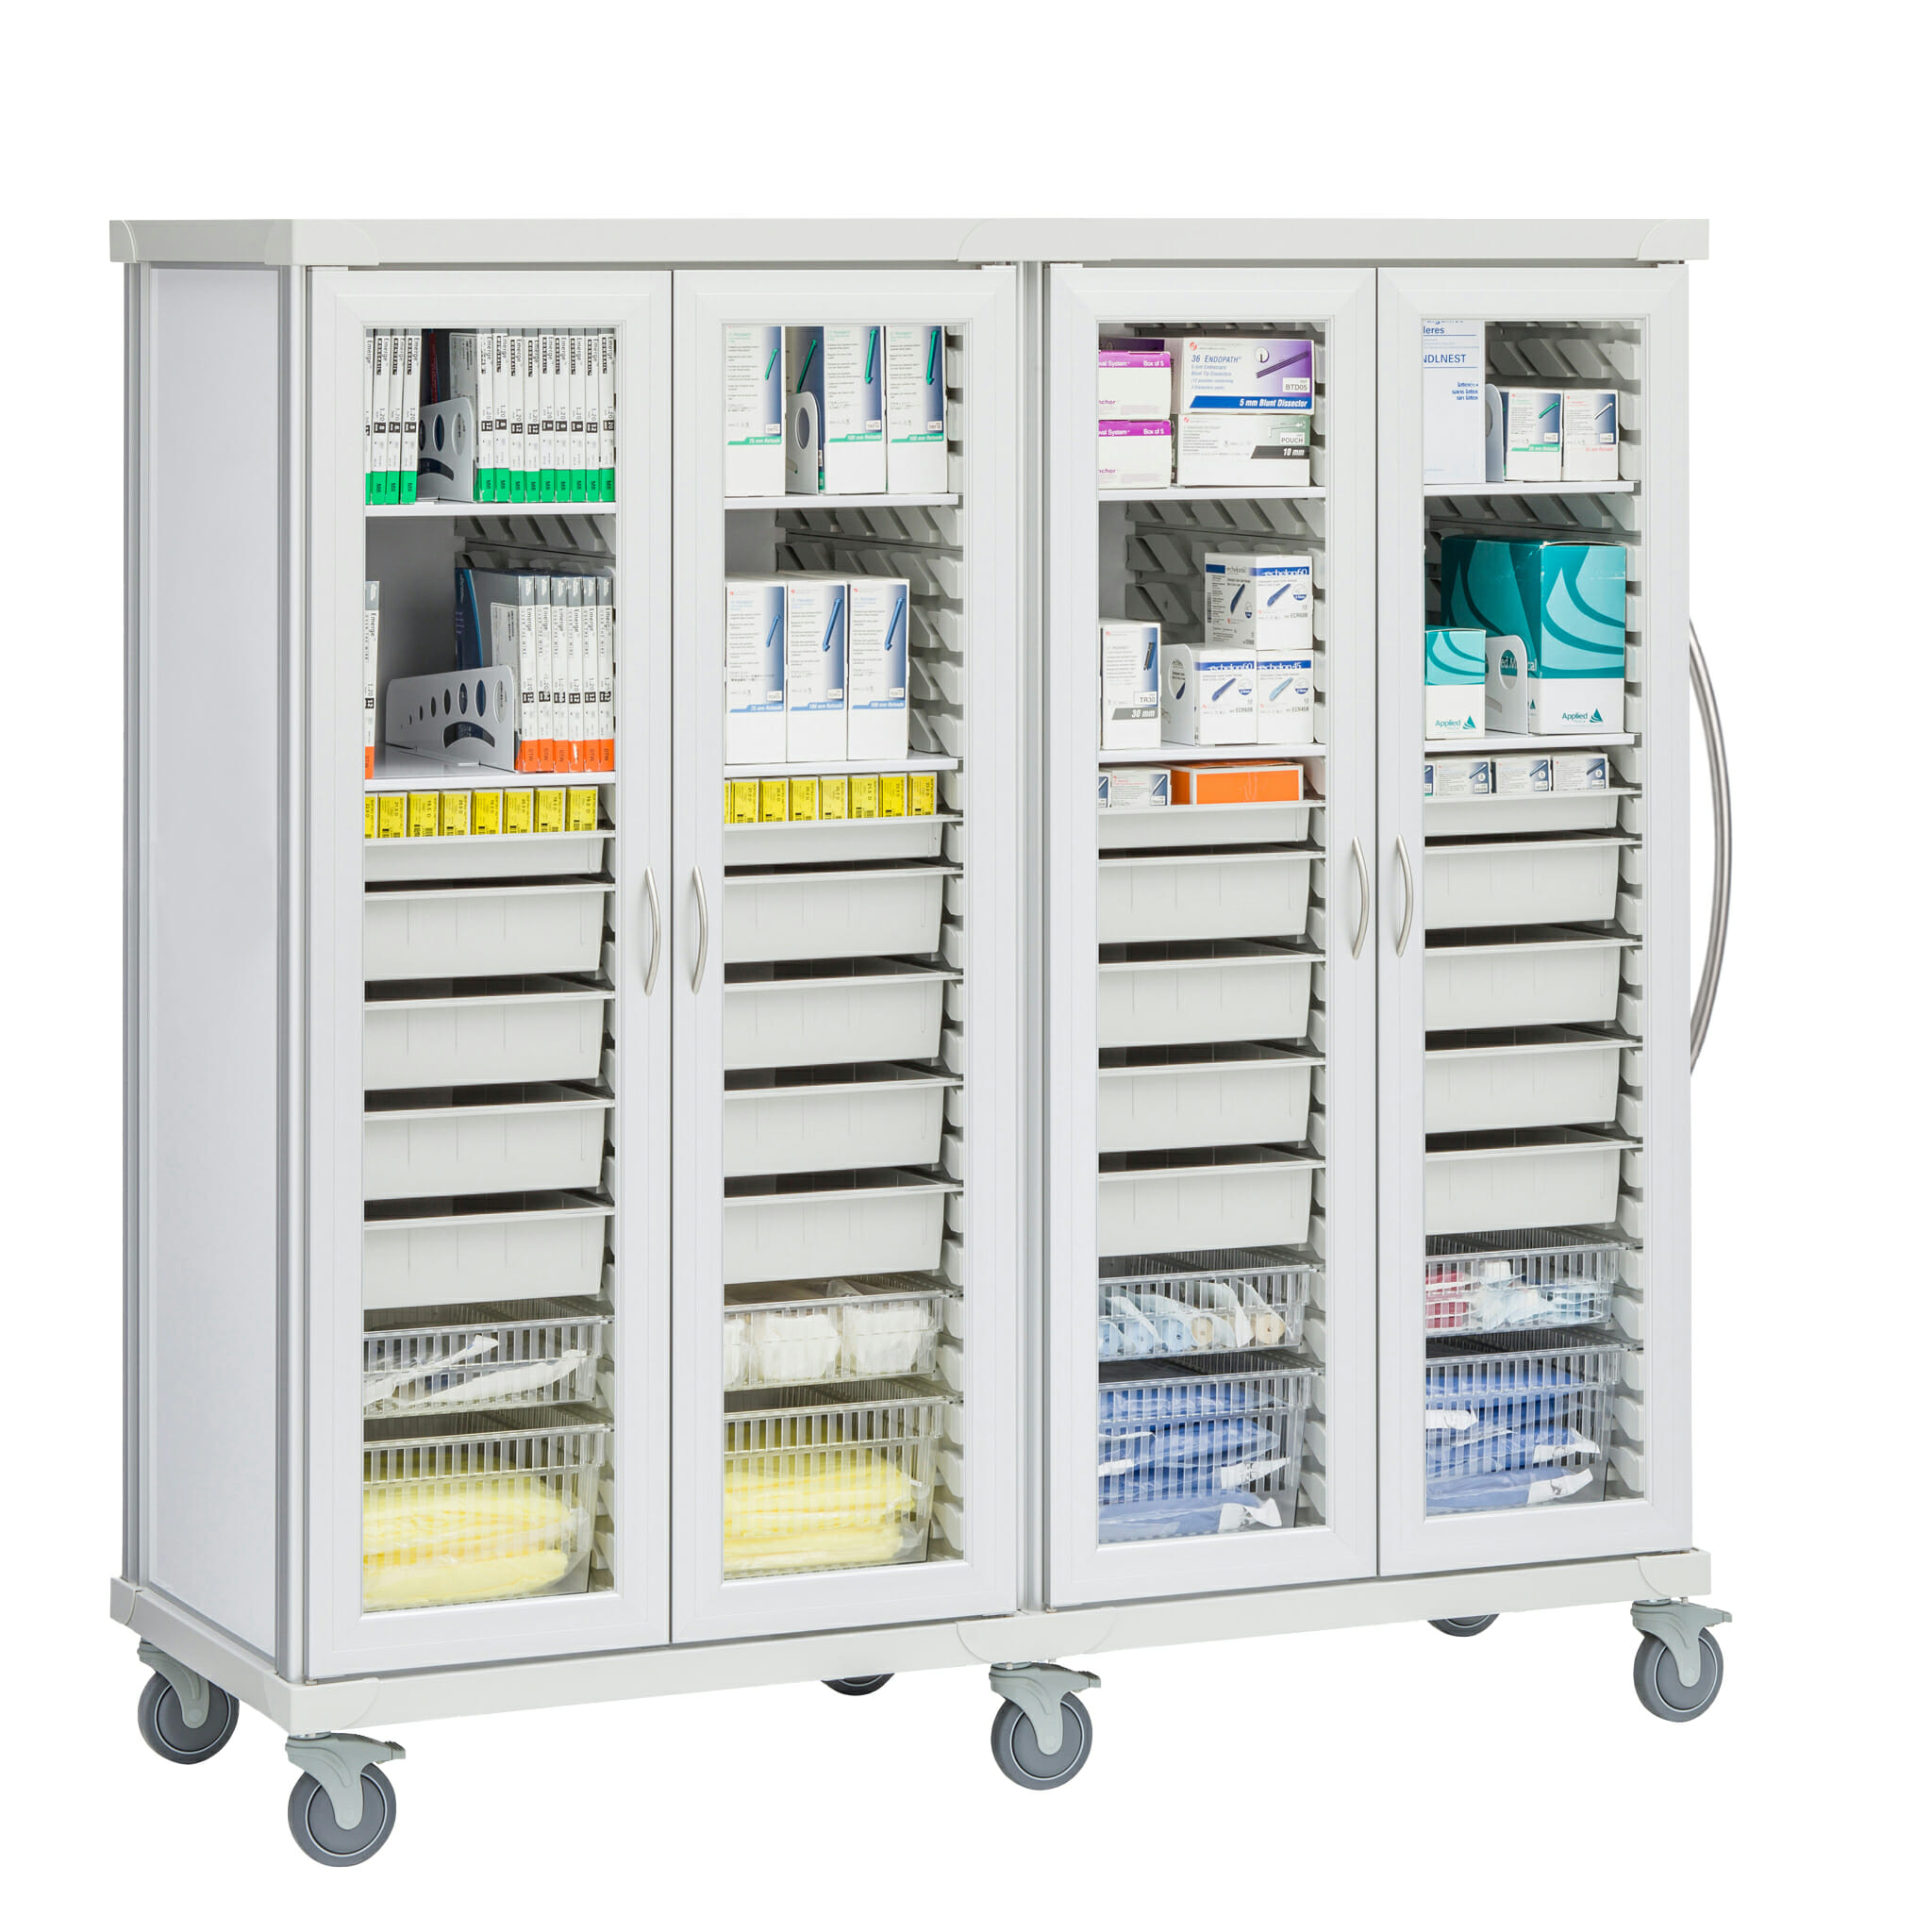 General Storage Cabinet with Divider